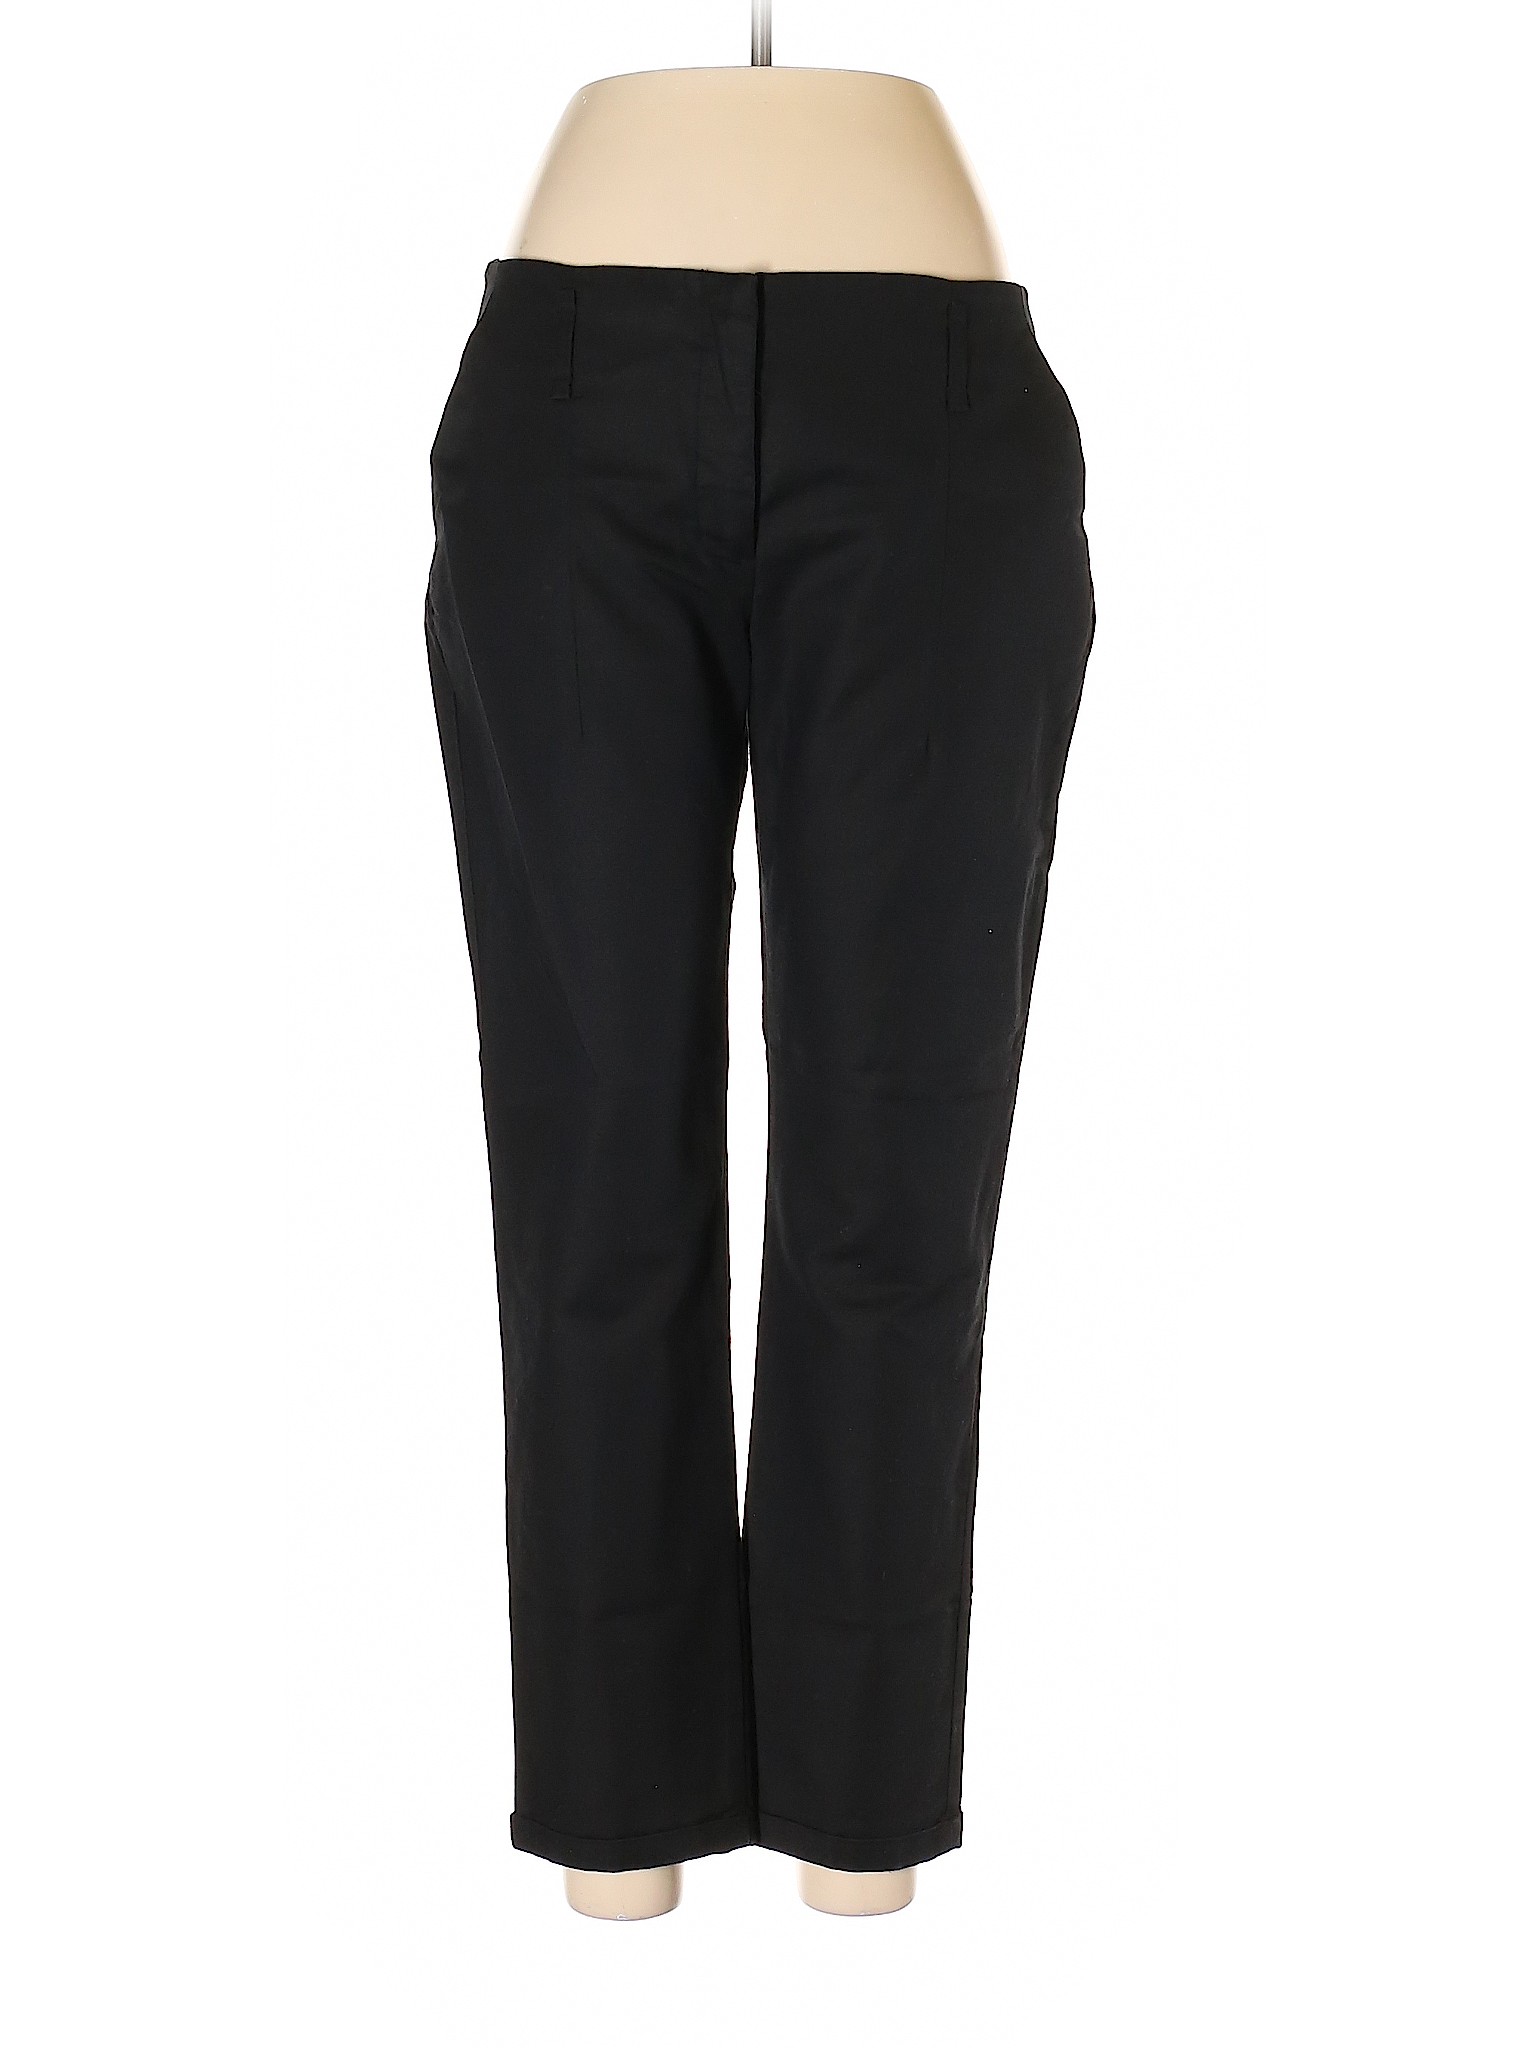 Zara Basic Women Black Casual Pants 8 | eBay